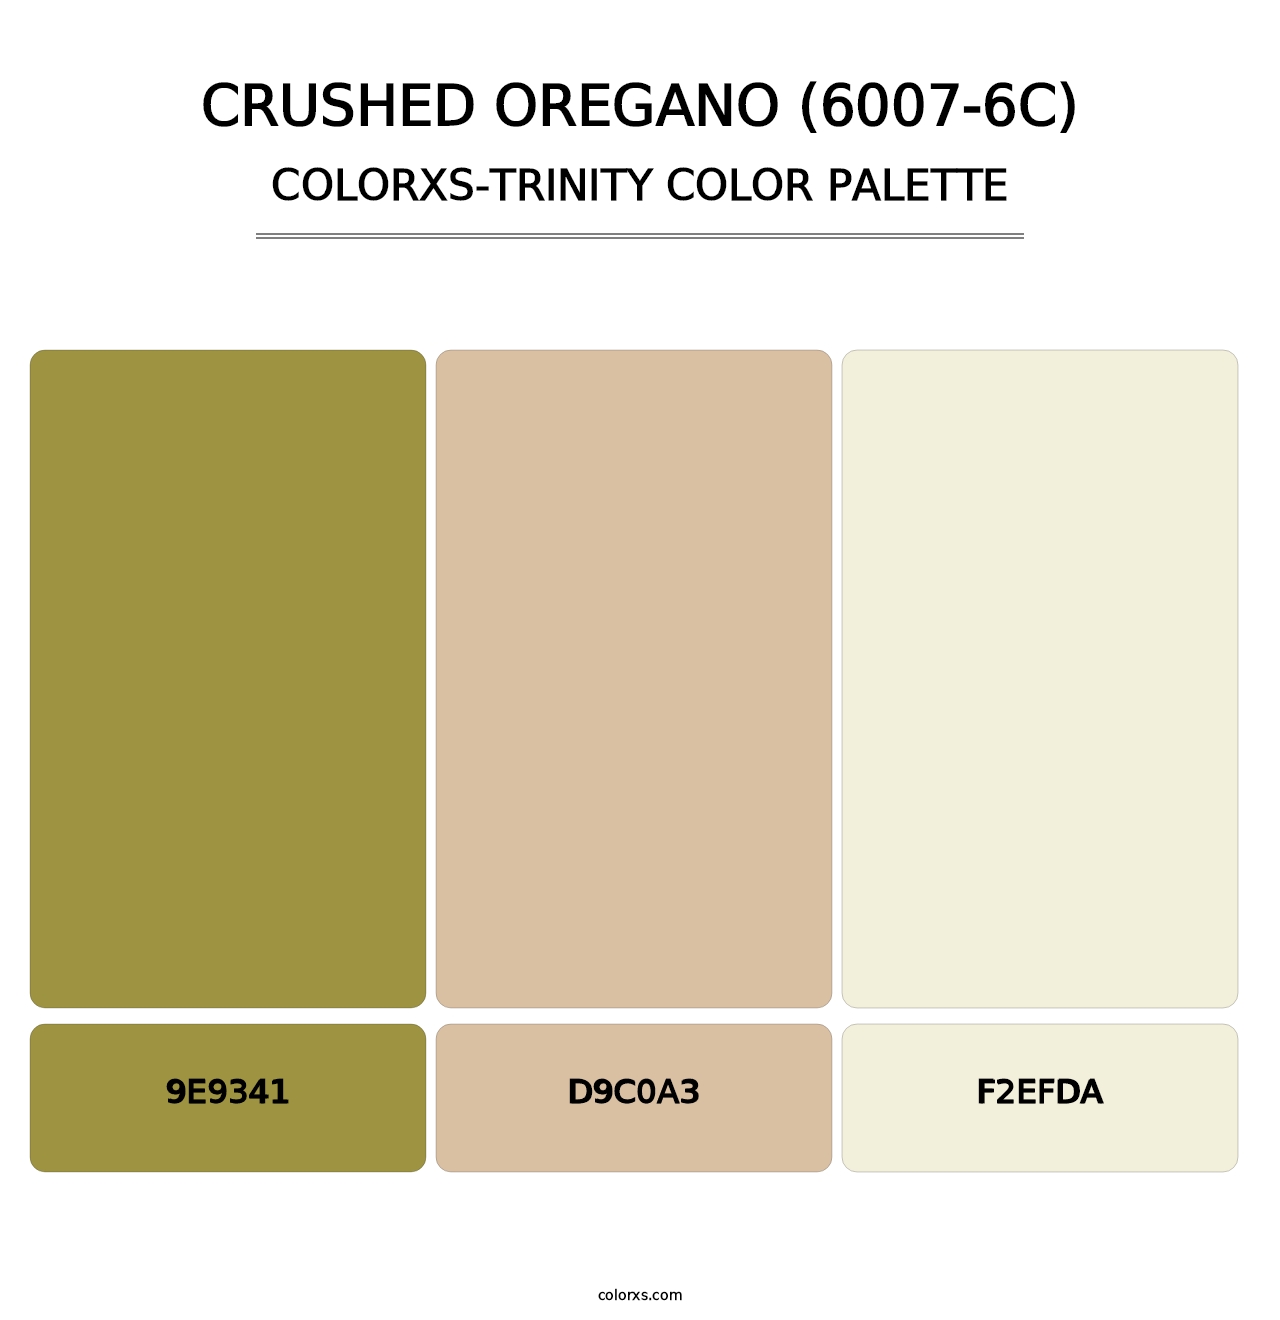 Crushed Oregano (6007-6C) - Colorxs Trinity Palette